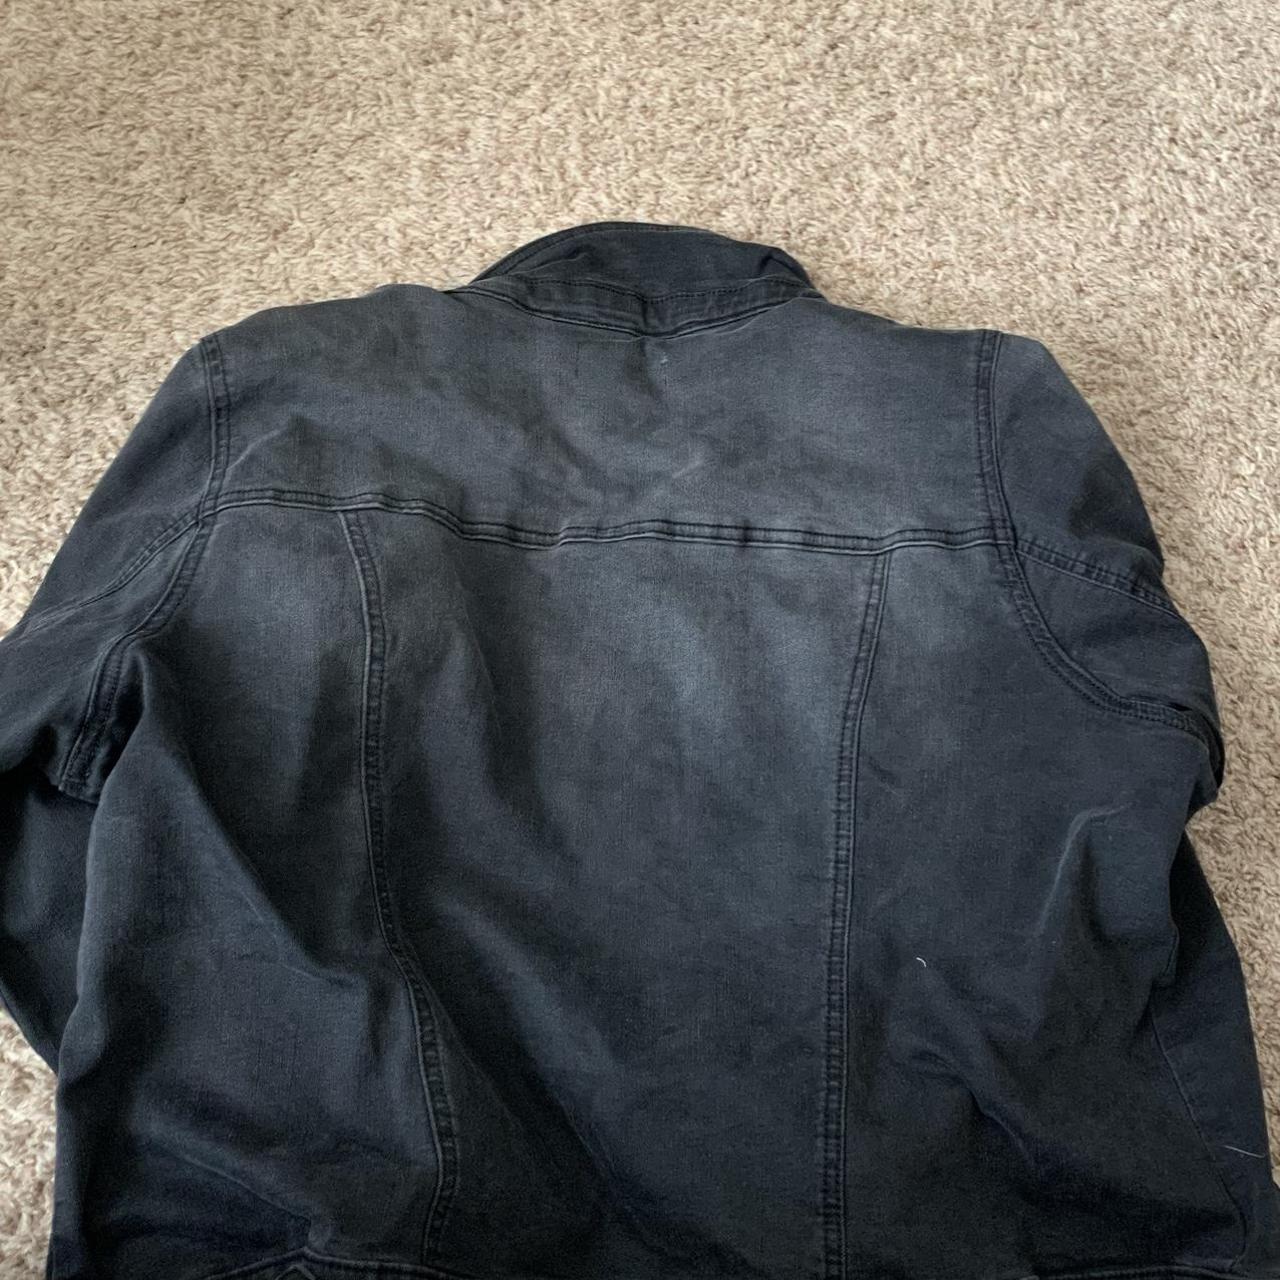 xl oversized black jean jacket #grunge #biker - Depop